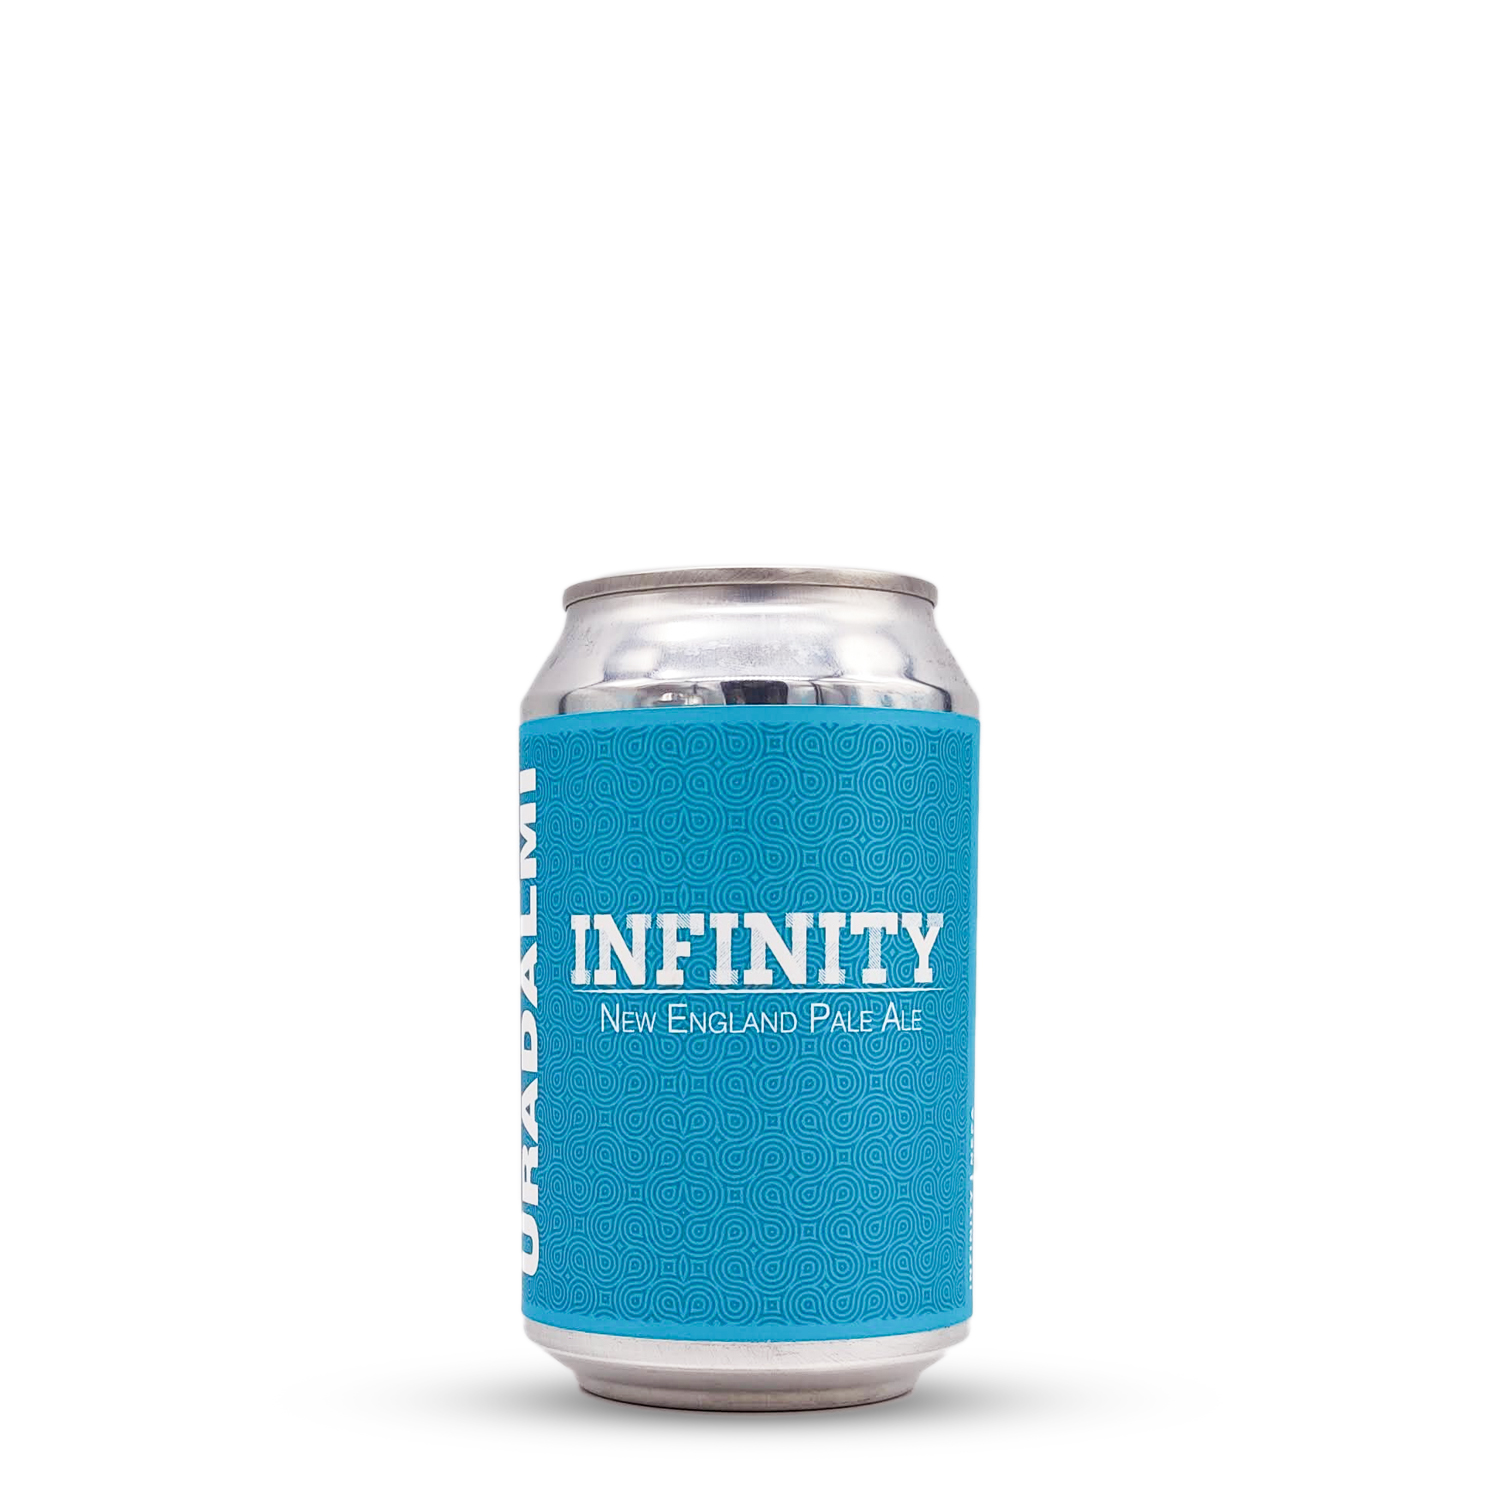 Infinity | Uradalmi (HU) | 0,33L - 5%